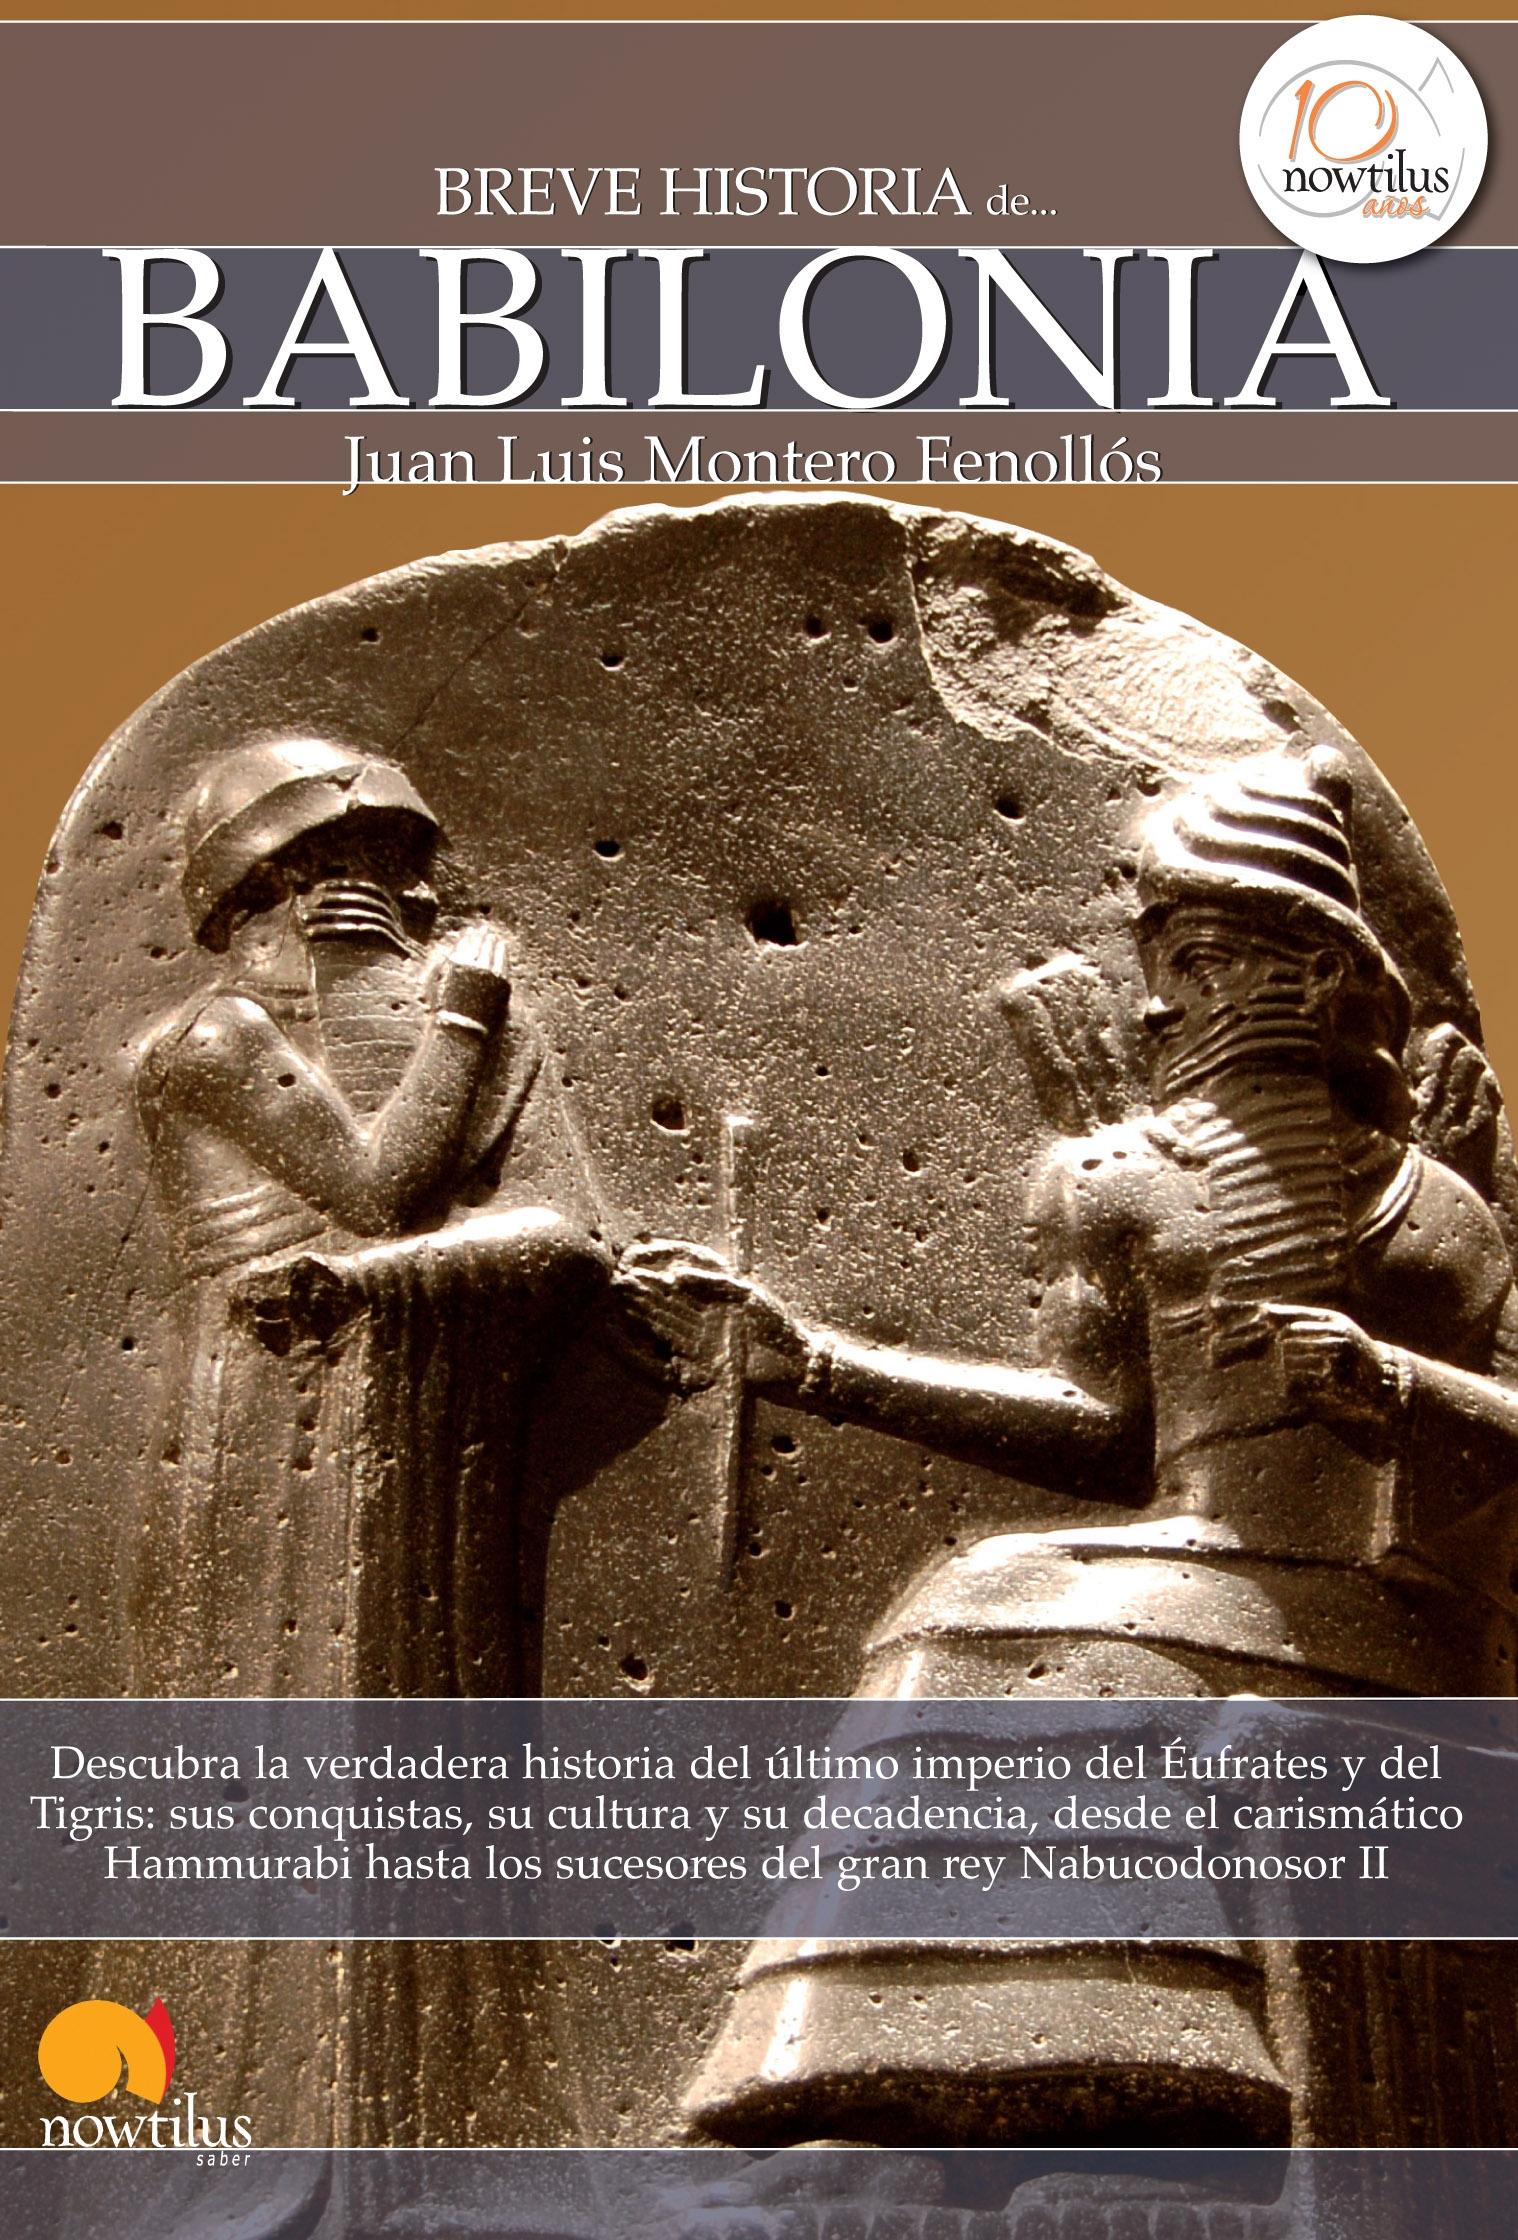 Breve Historia Babilonia